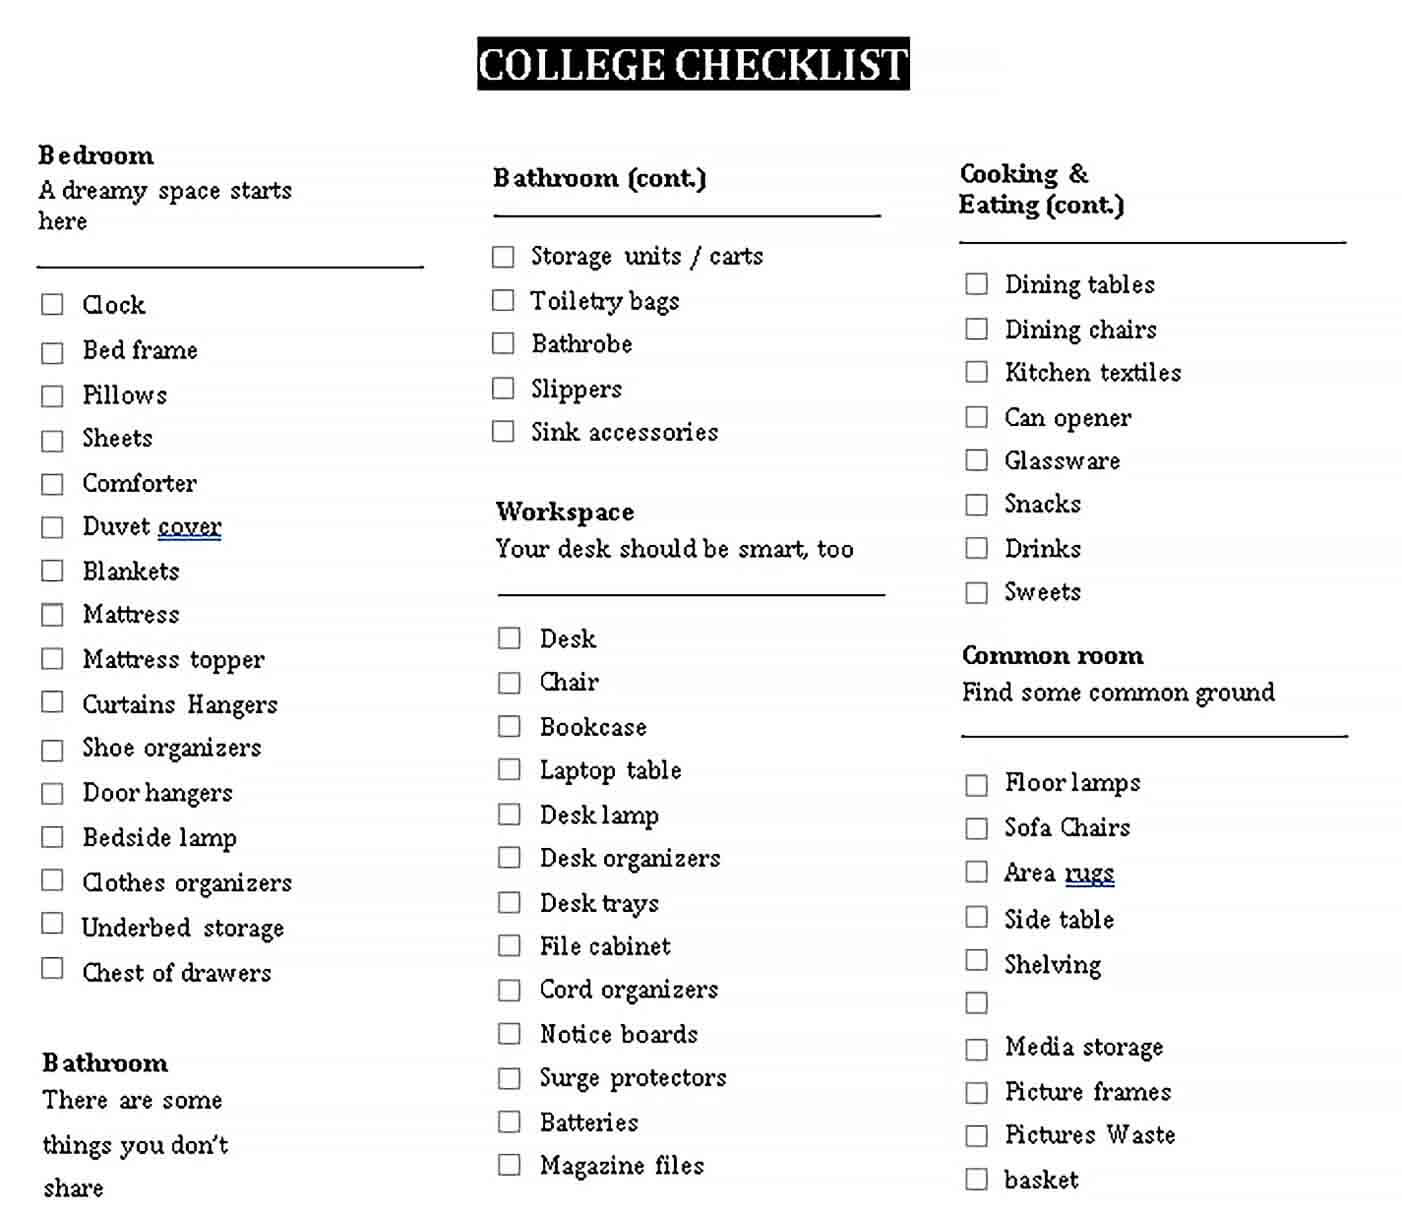 Sample Dorm Room Checklist for College